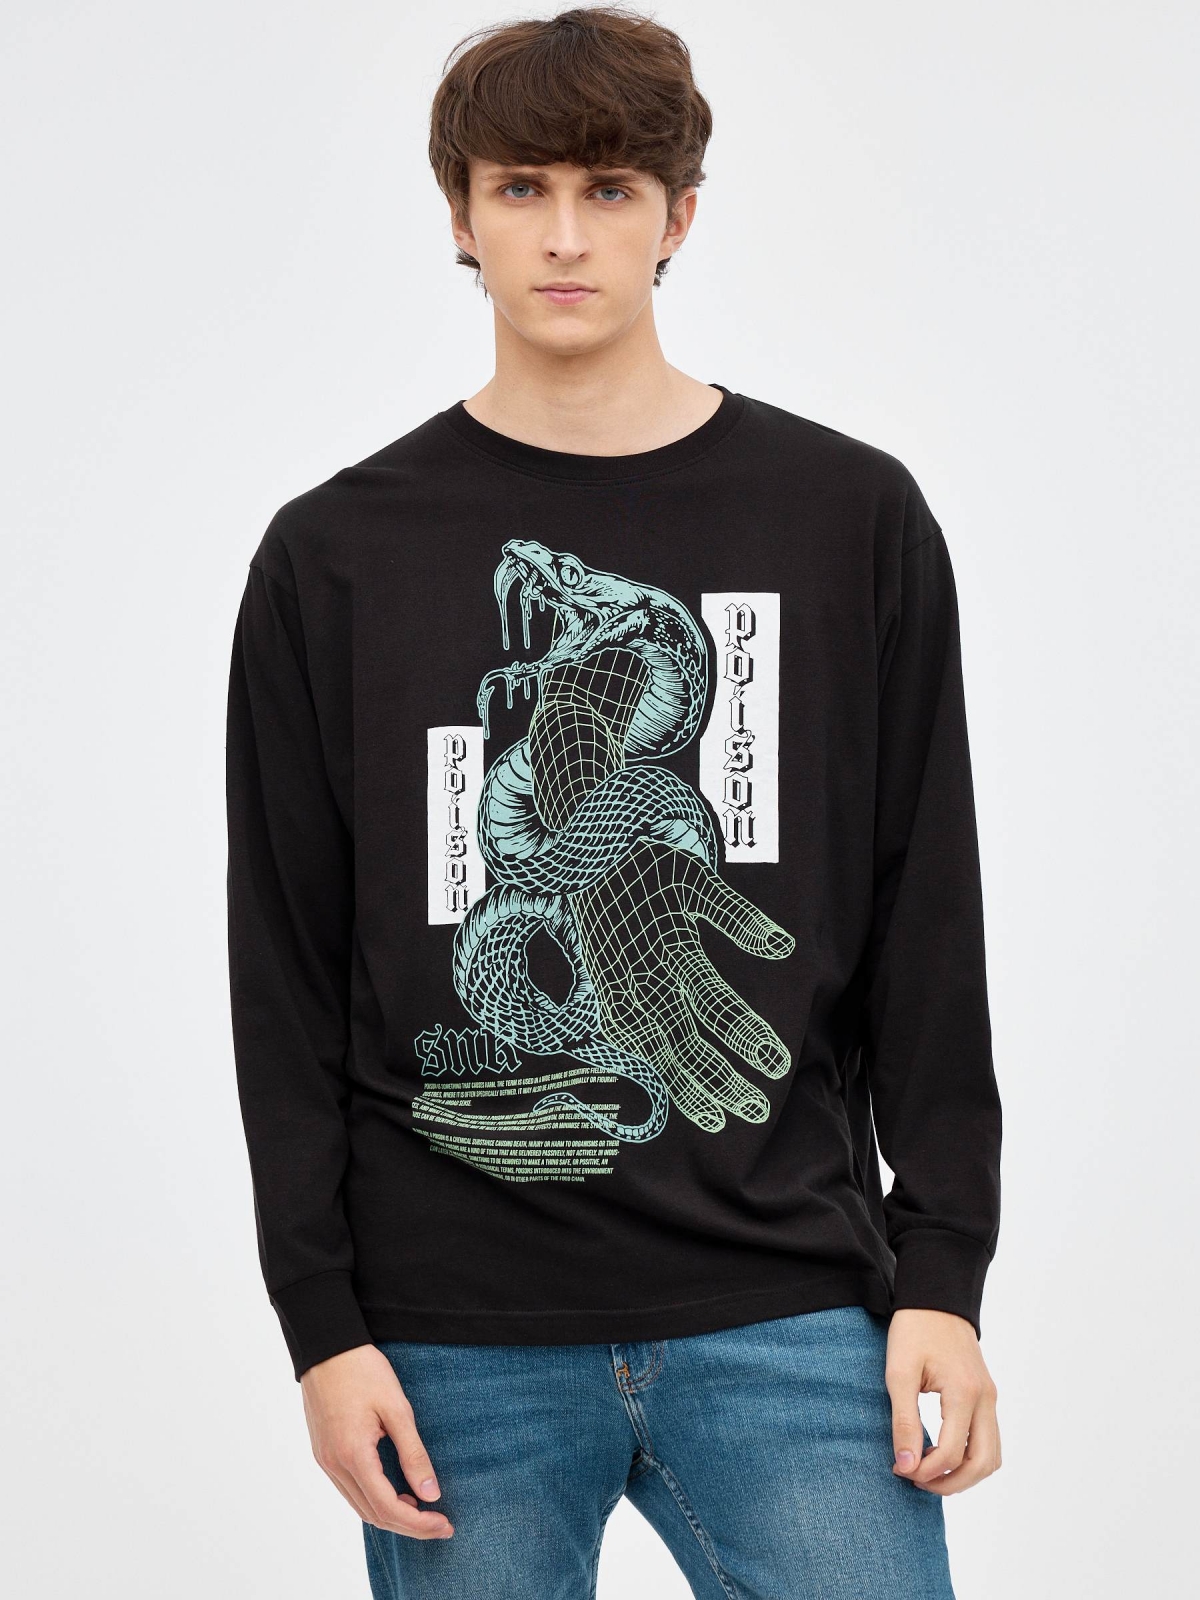 Camiseta oversized print serpiente negro vista media frontal